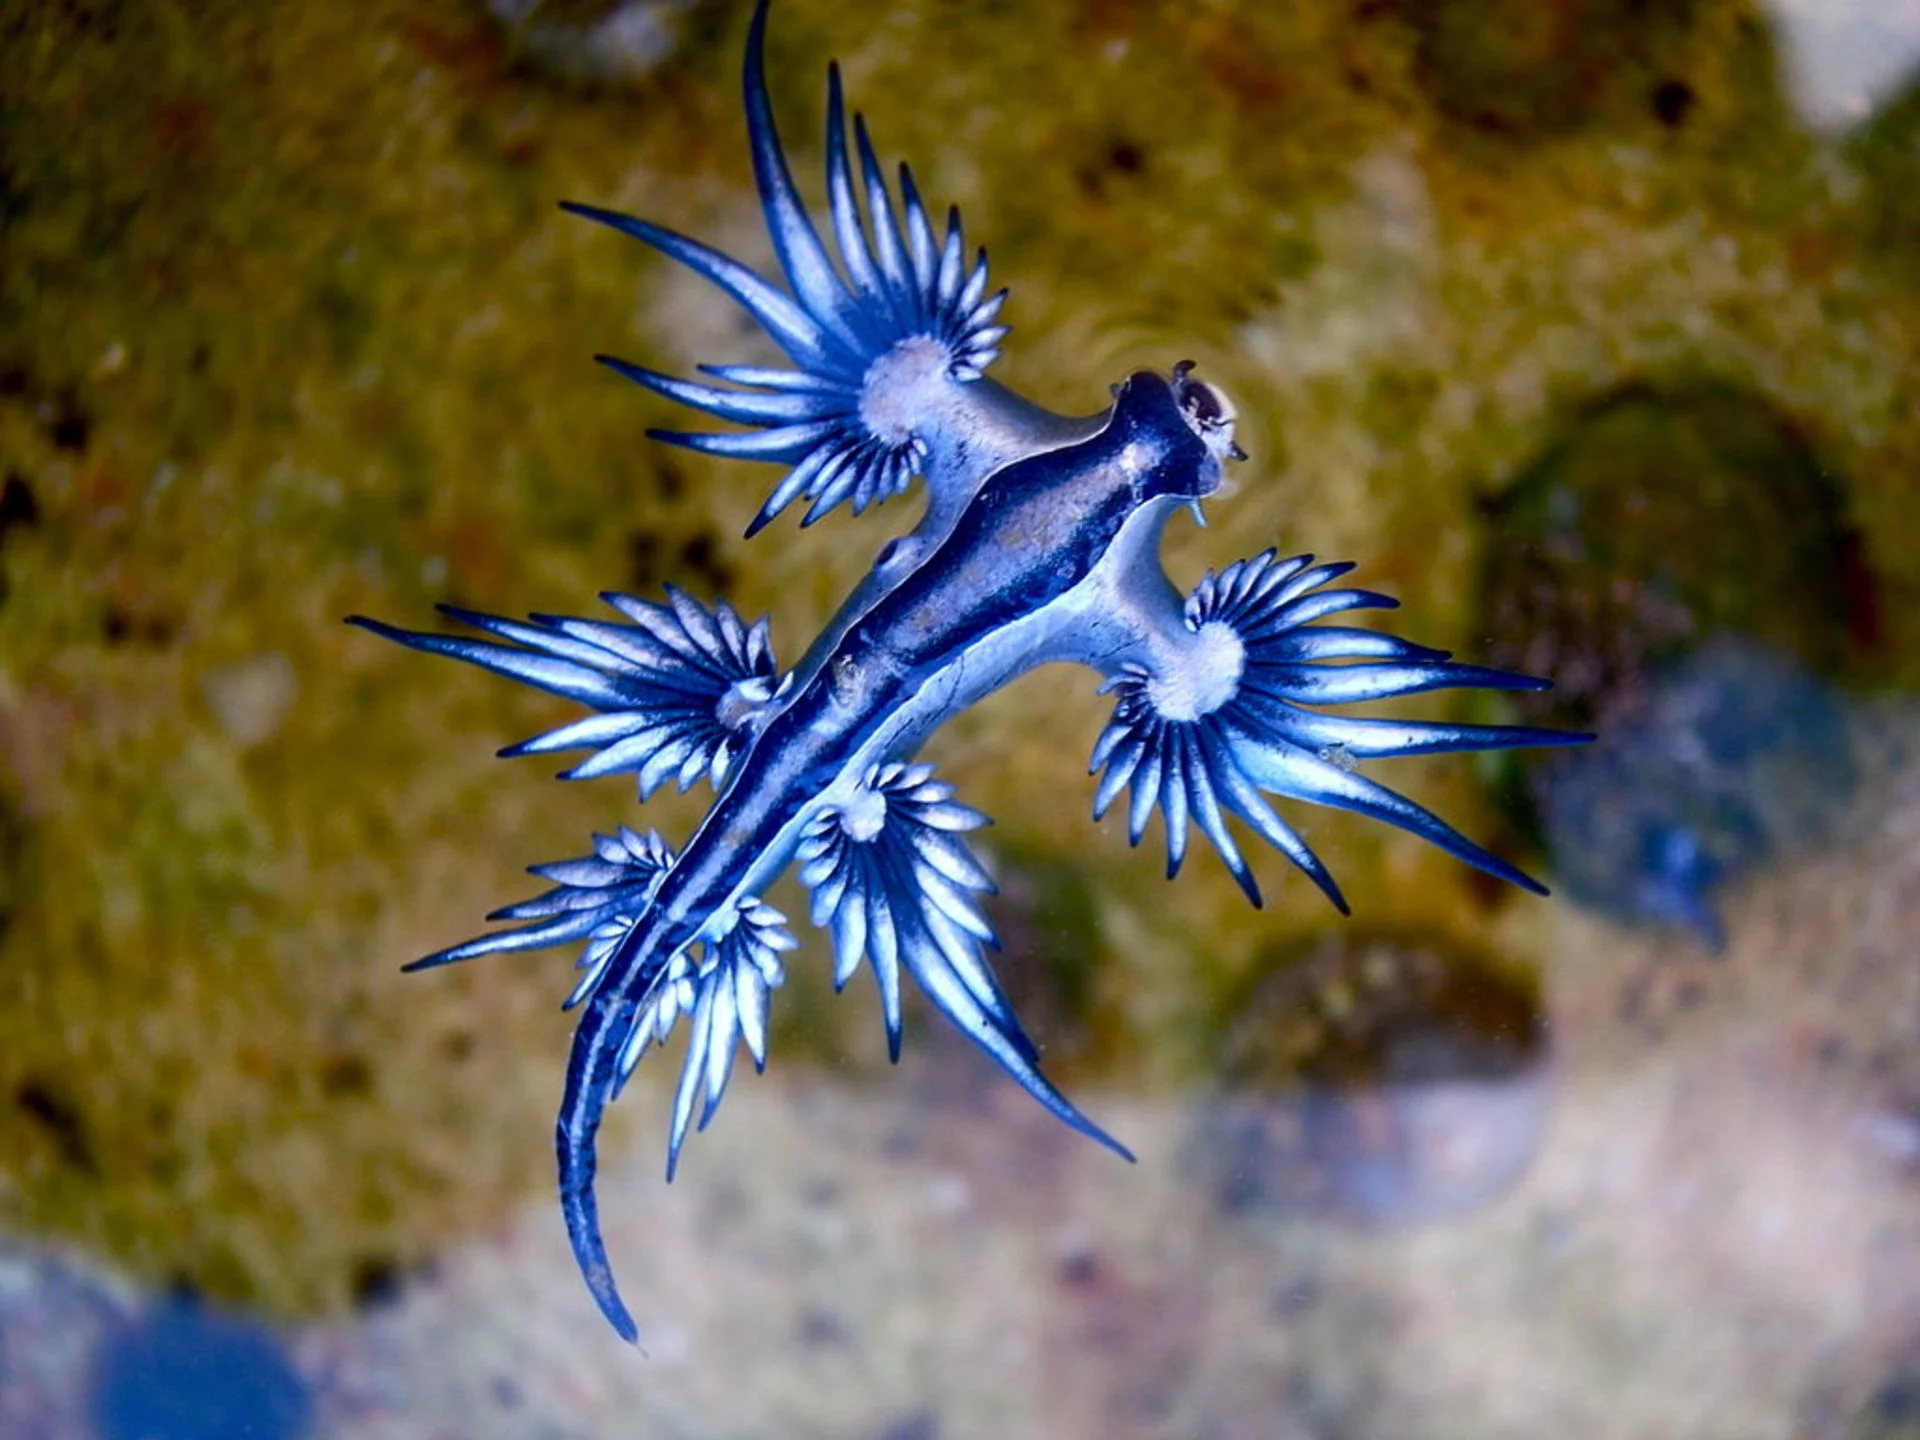 Enchanting but dangerous 'blue dragon' washes ashore in Texas